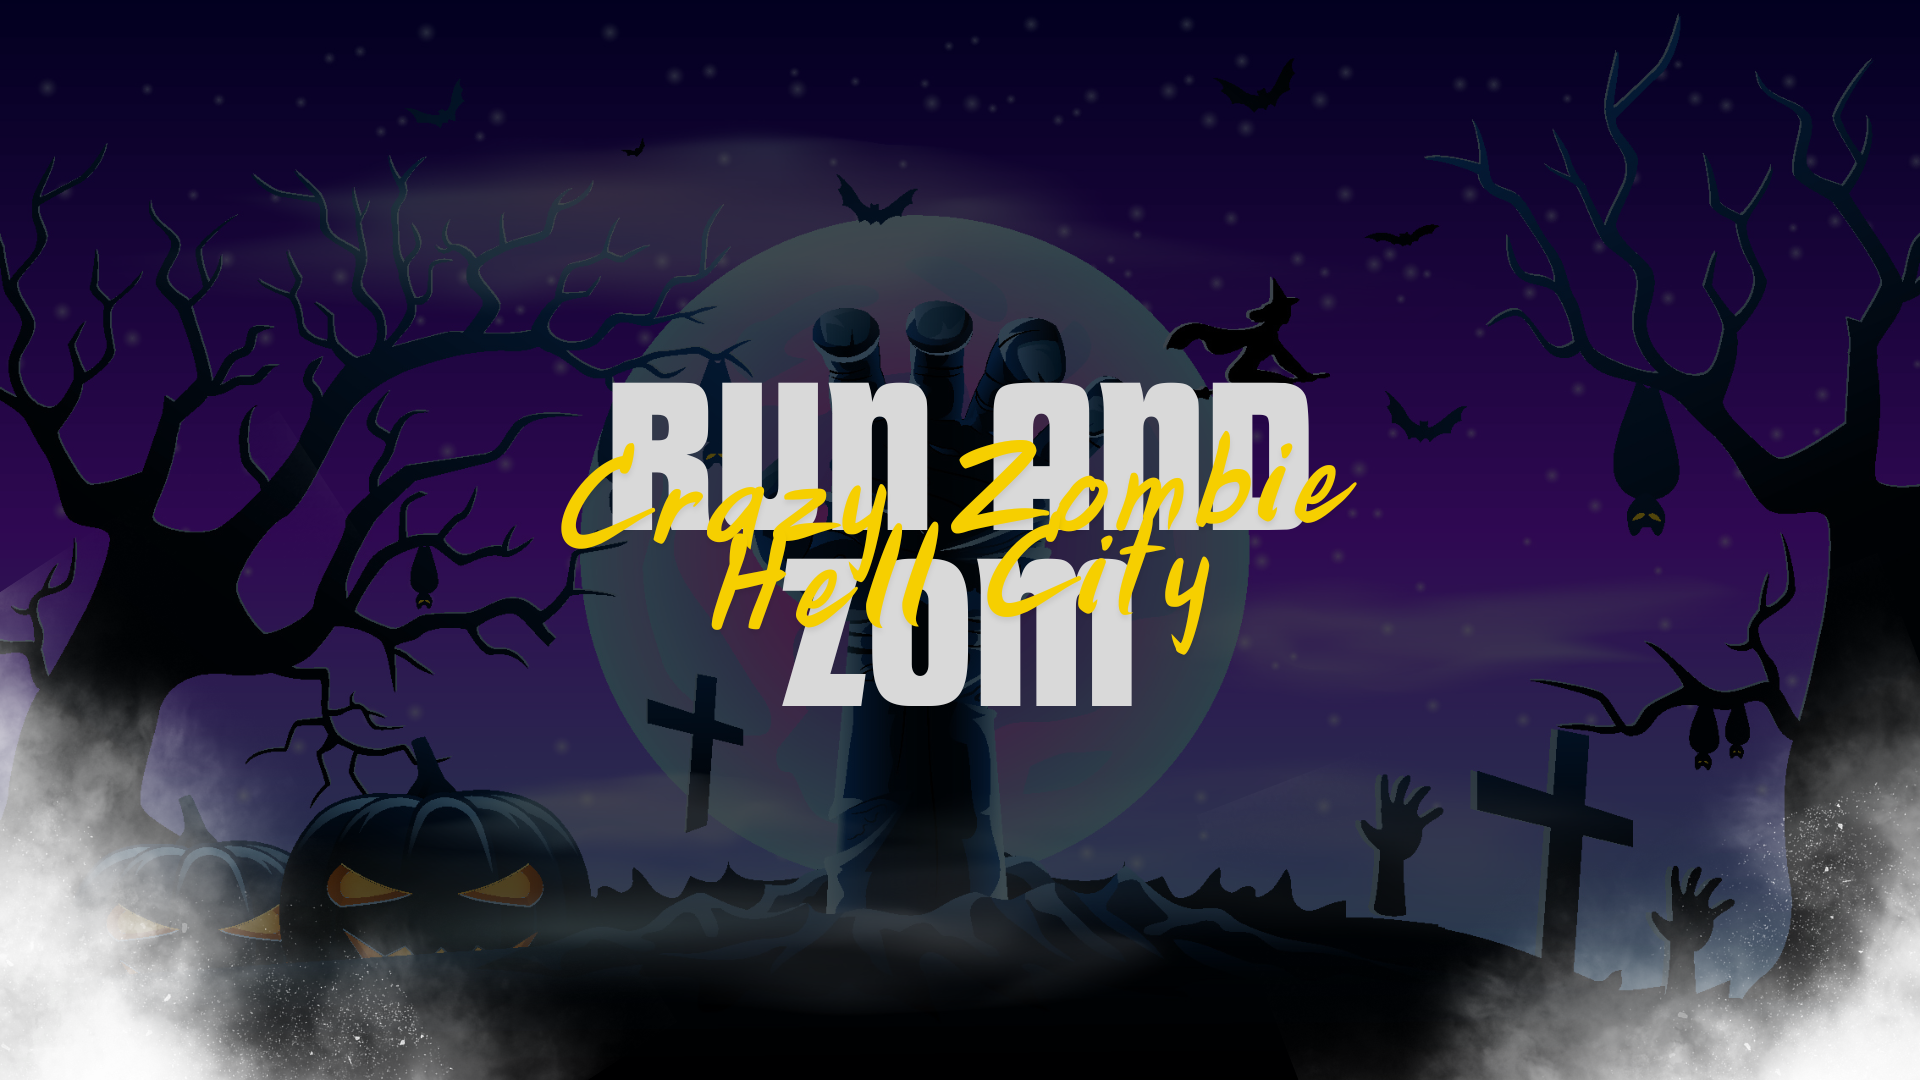 Zom And Run